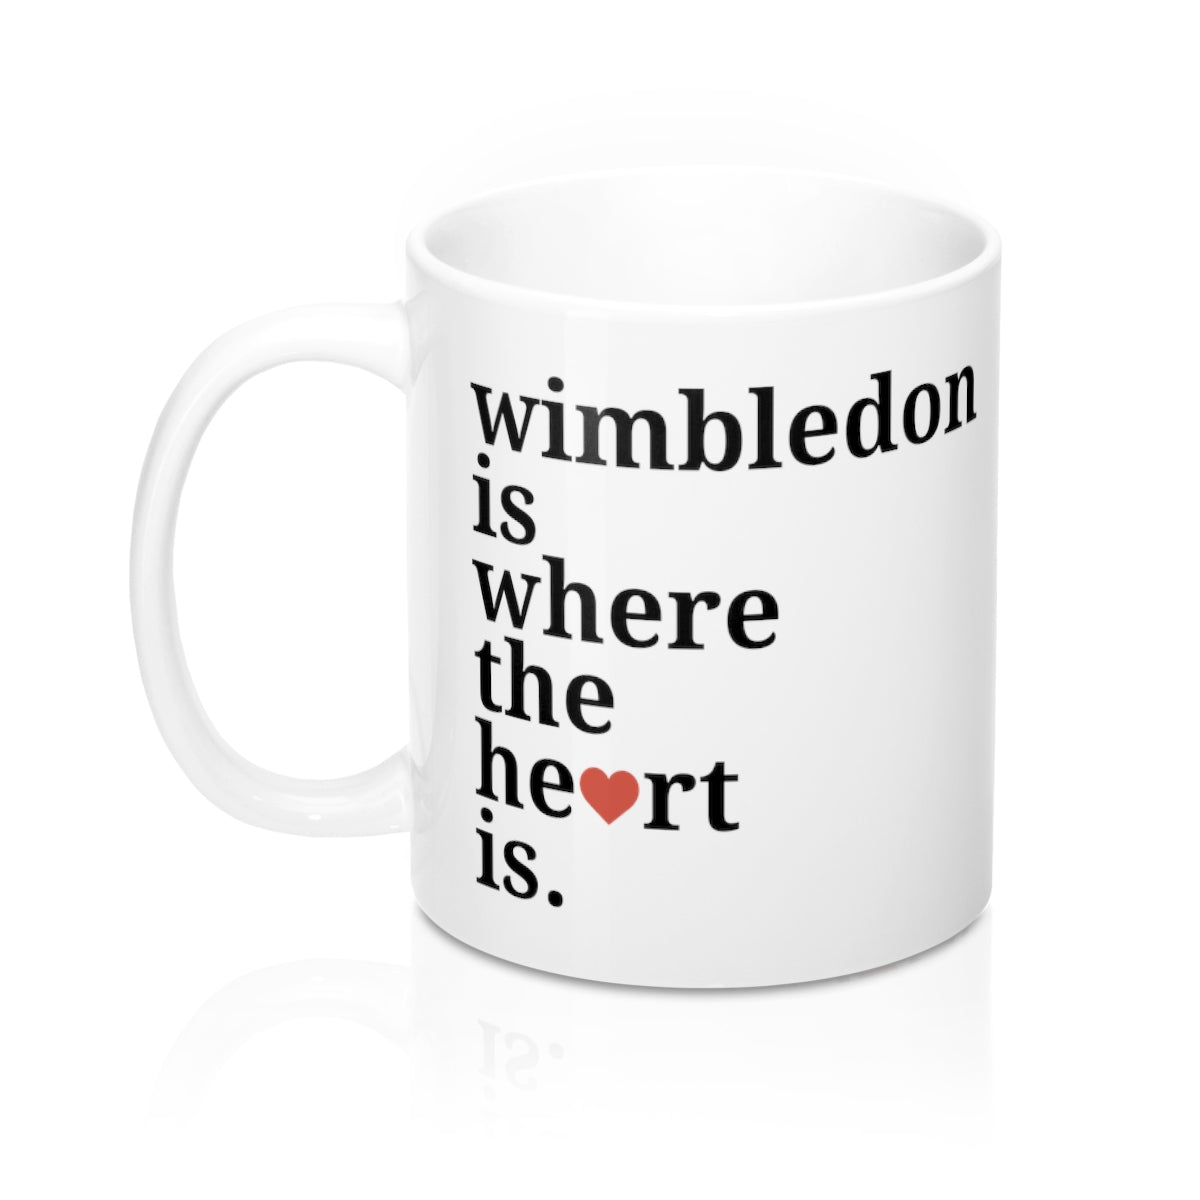 Wimbledon is Where The Heart Is Mug